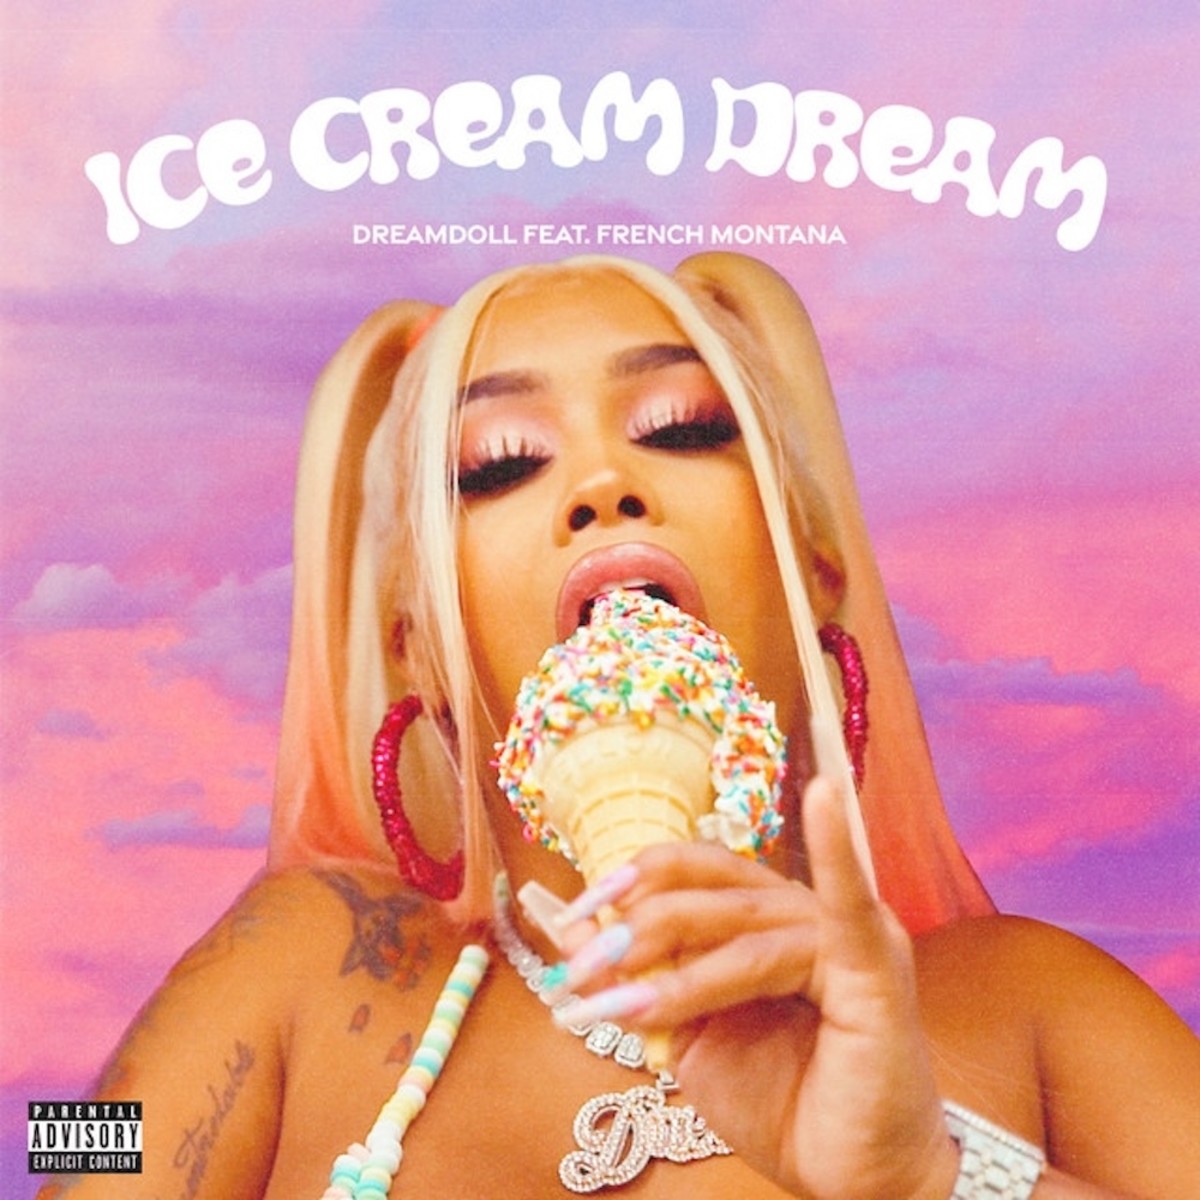 Dreamdoll French Montana Ice Cream Dream Dreamdoll Links With French Montana On “Ice Cream Dream” Track